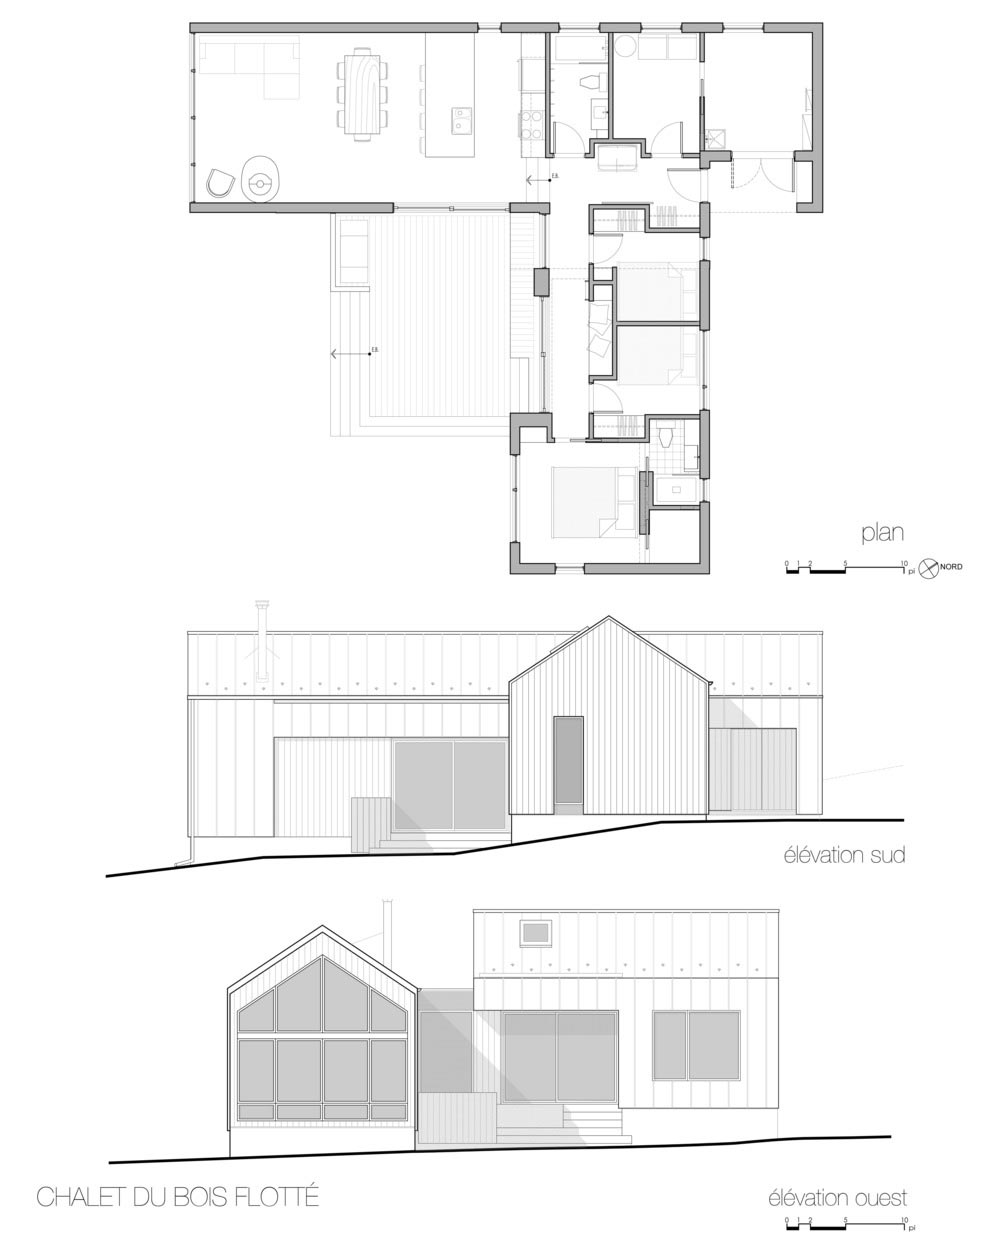 rustic cabin design plan bt - The Driftwood Chalet